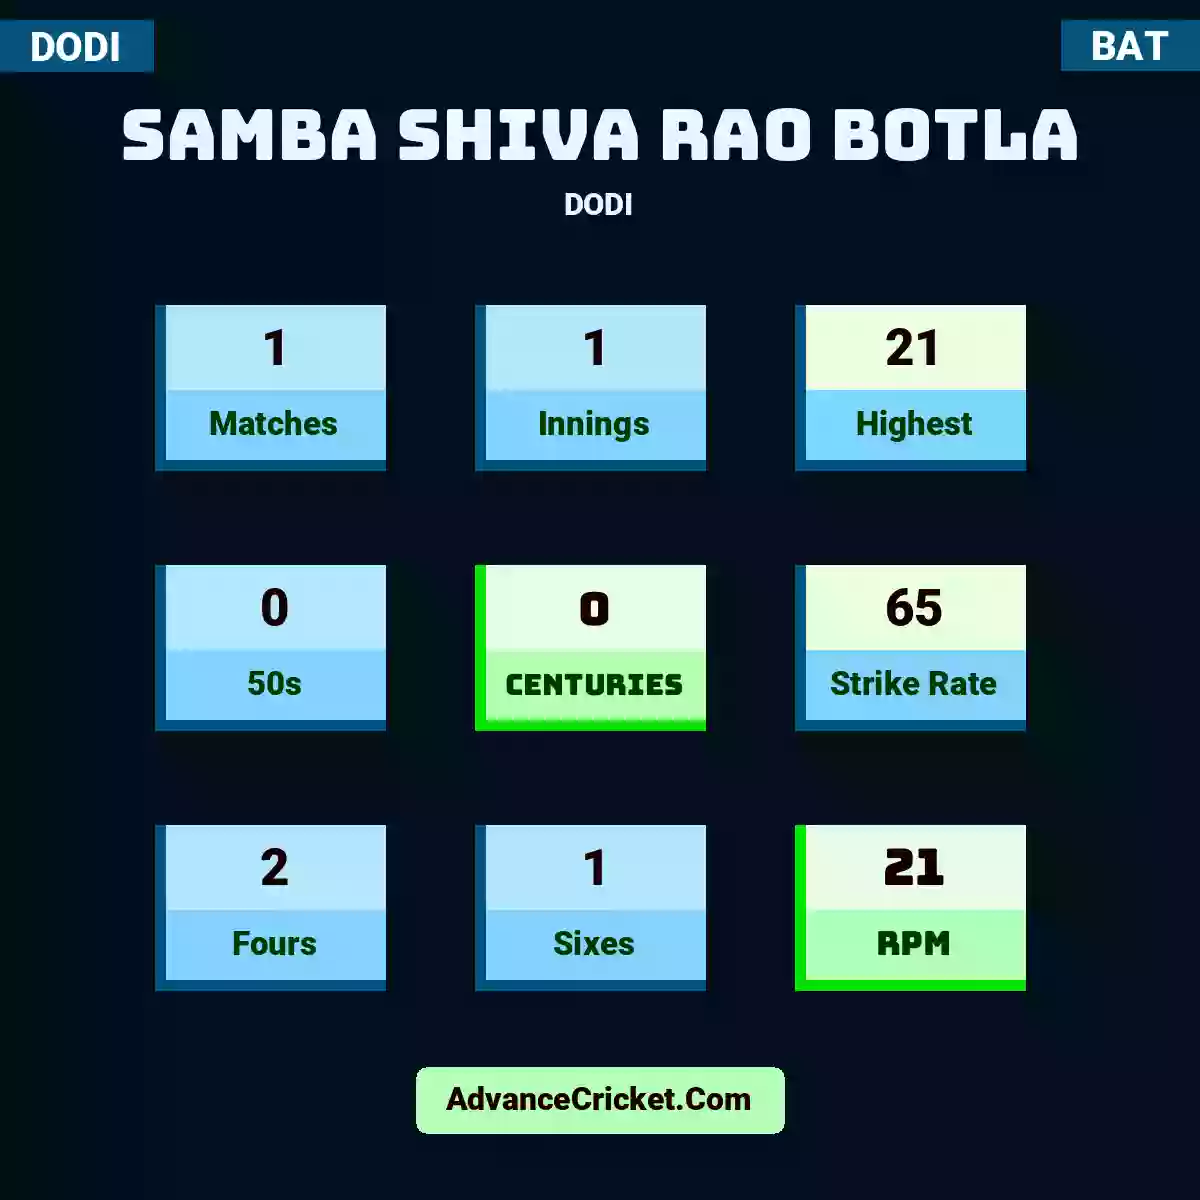 Samba Shiva Rao Botla DODI , Samba Shiva Rao Botla played 1 matches, scored 21 runs as highest, 0 half-centuries, and 0 centuries, with a strike rate of 65. S.Shiva.Rao.Botla hit 2 fours and 1 sixes, with an RPM of 21.